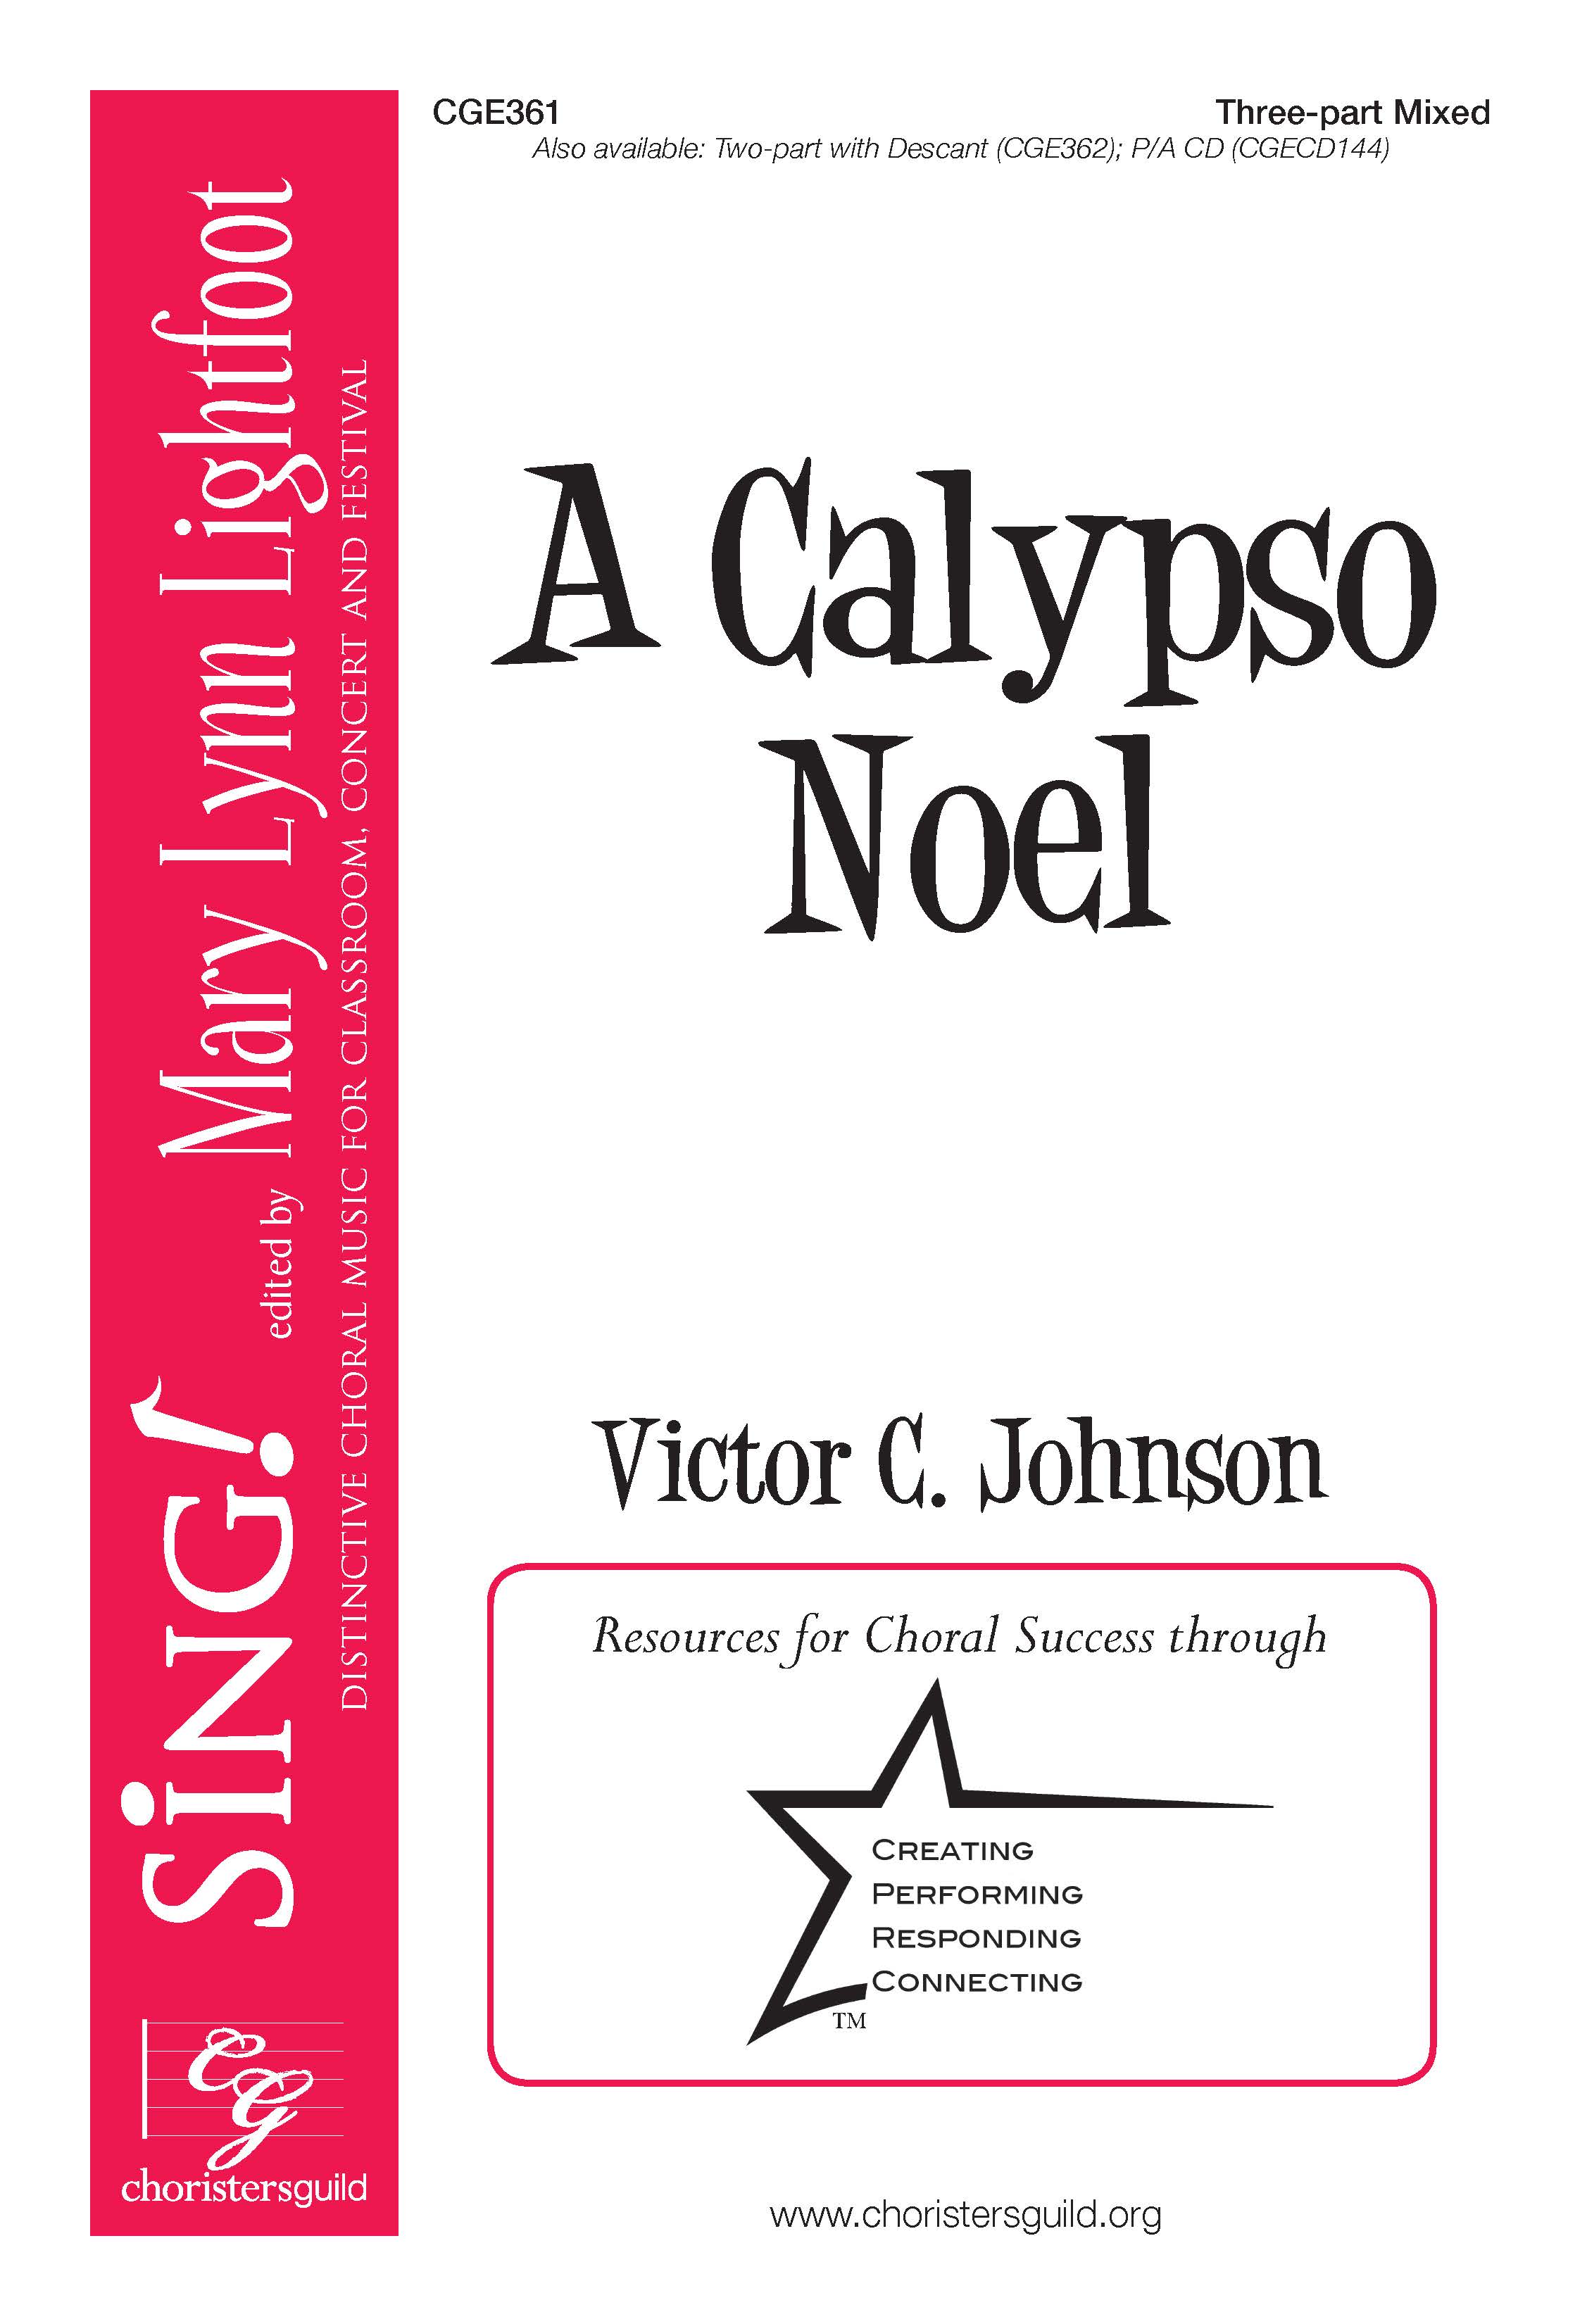 A Calypso Noel - Three-part Mixed